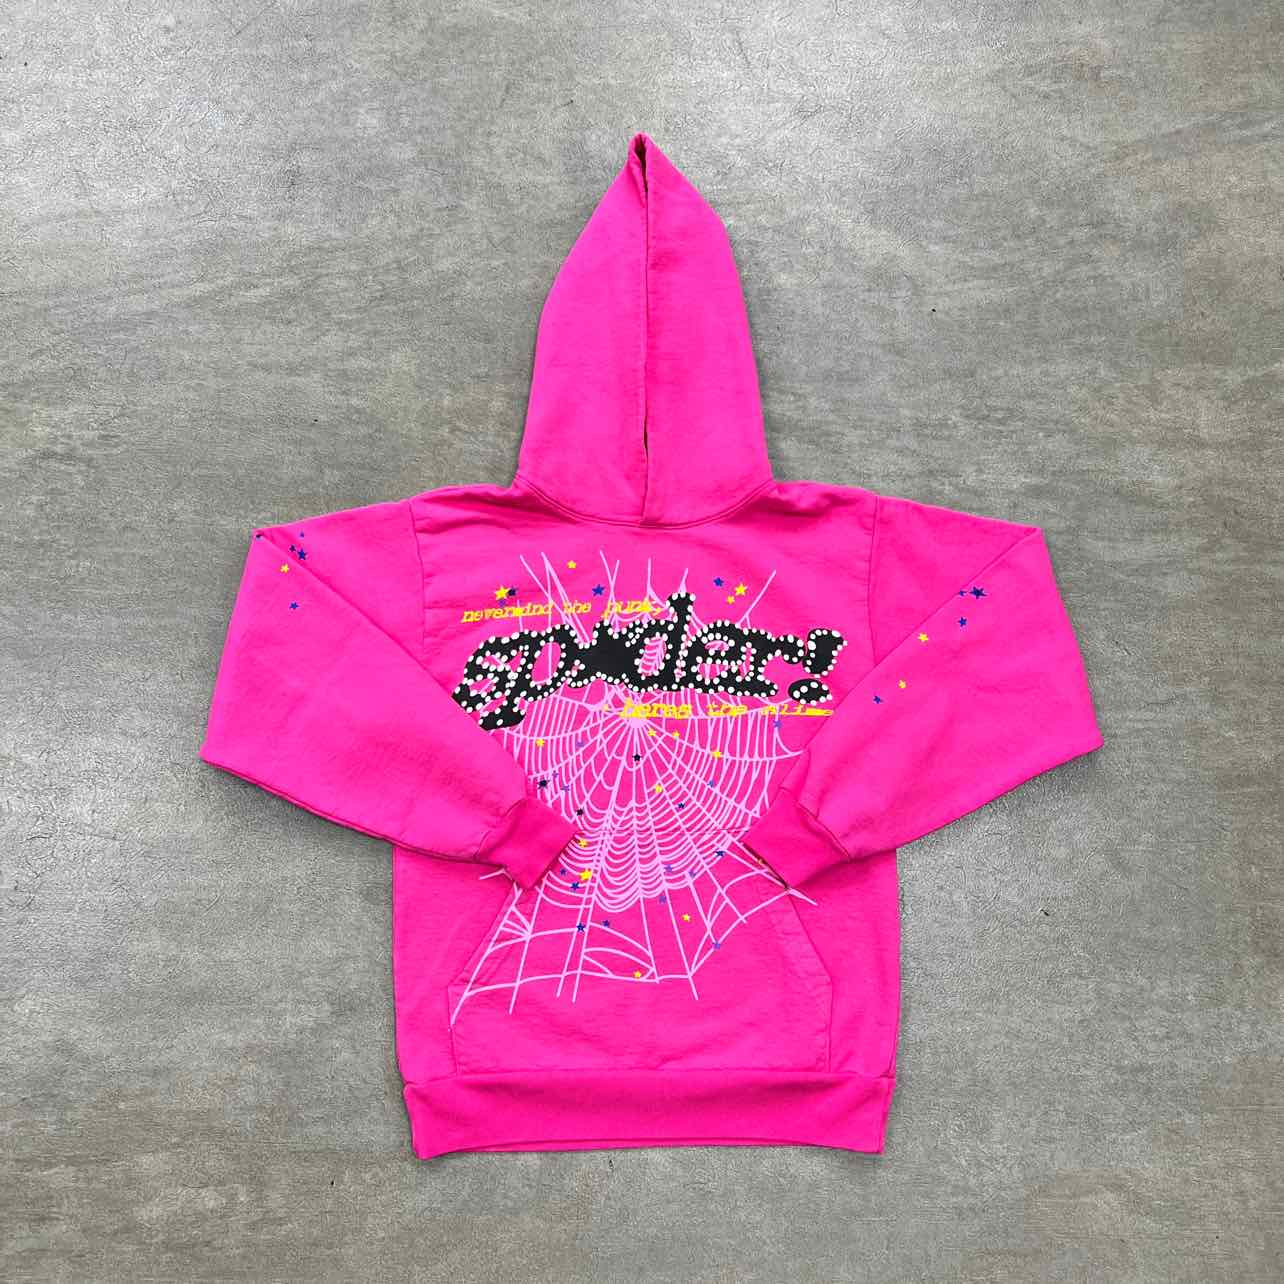 Sp5der Hoodie "P*NK" Pink New Size L